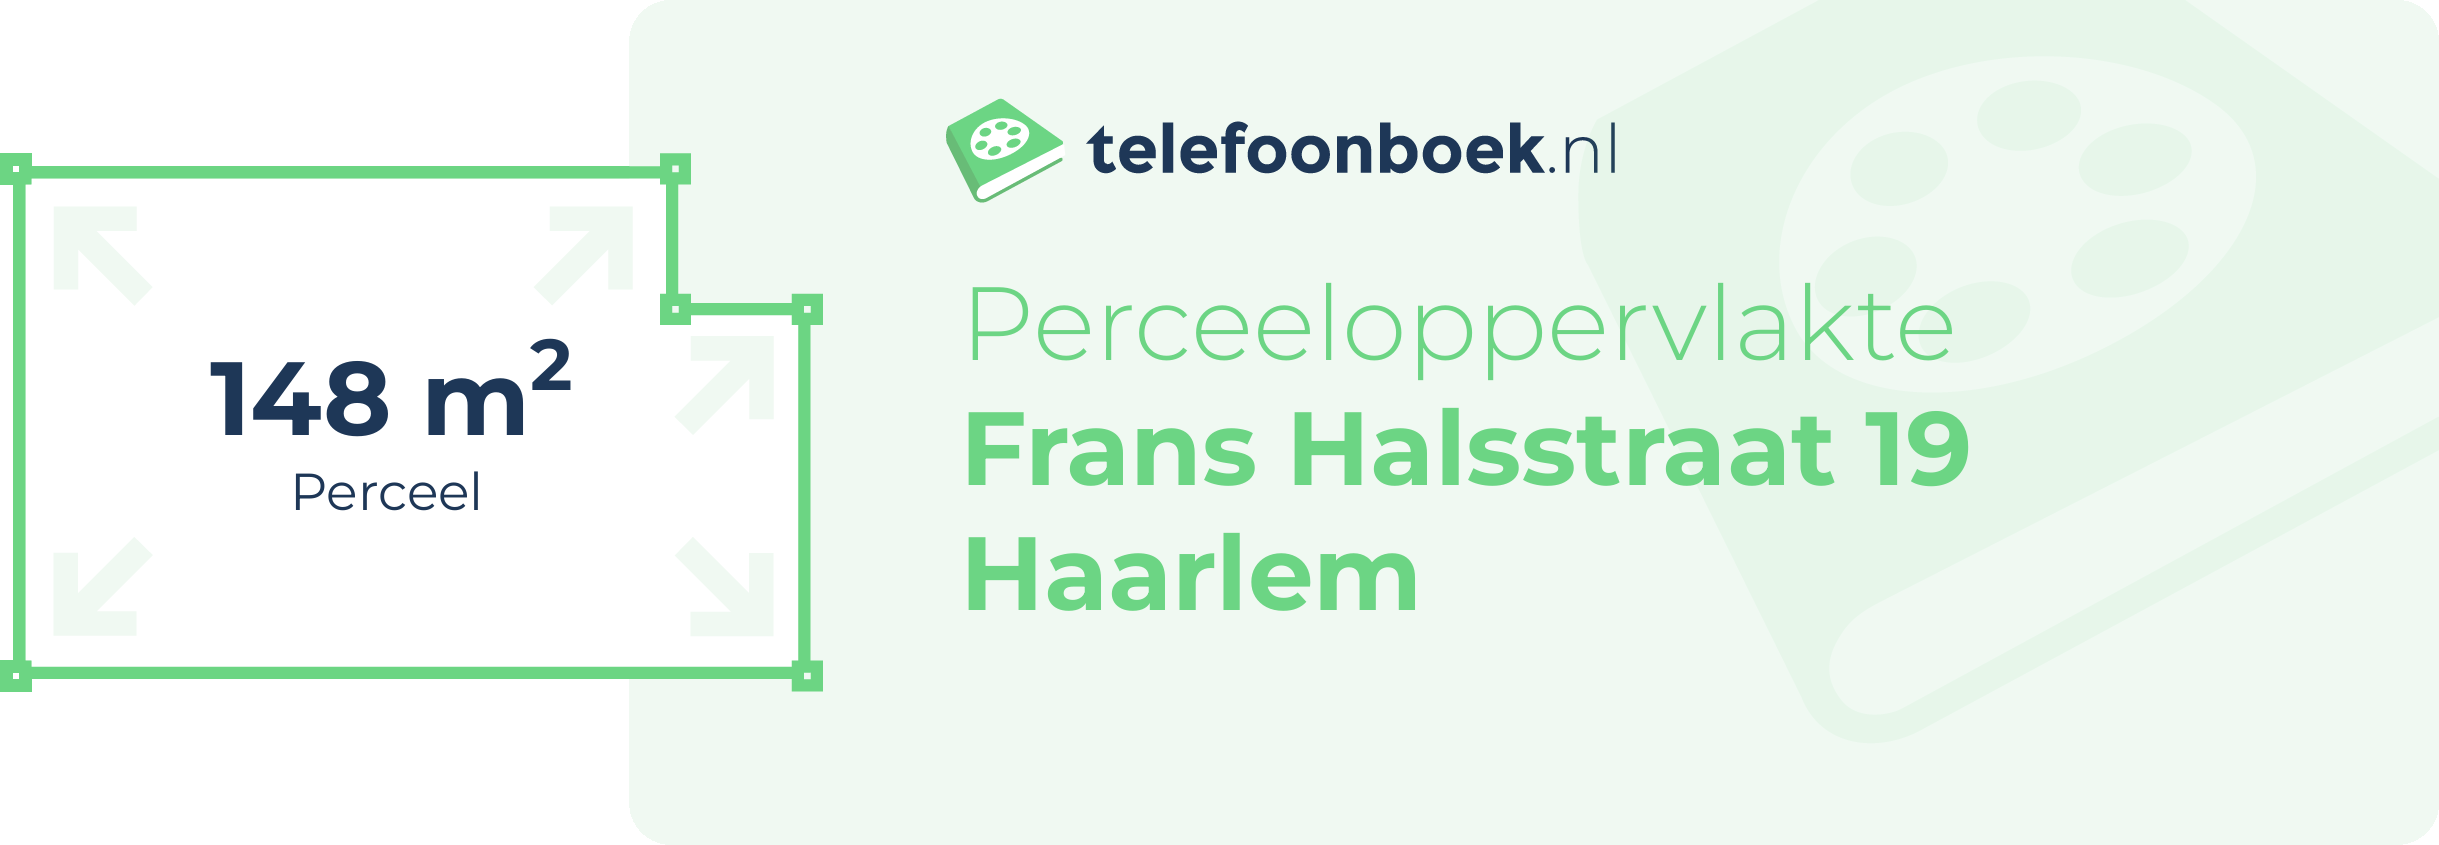 Perceeloppervlakte Frans Halsstraat 19 Haarlem